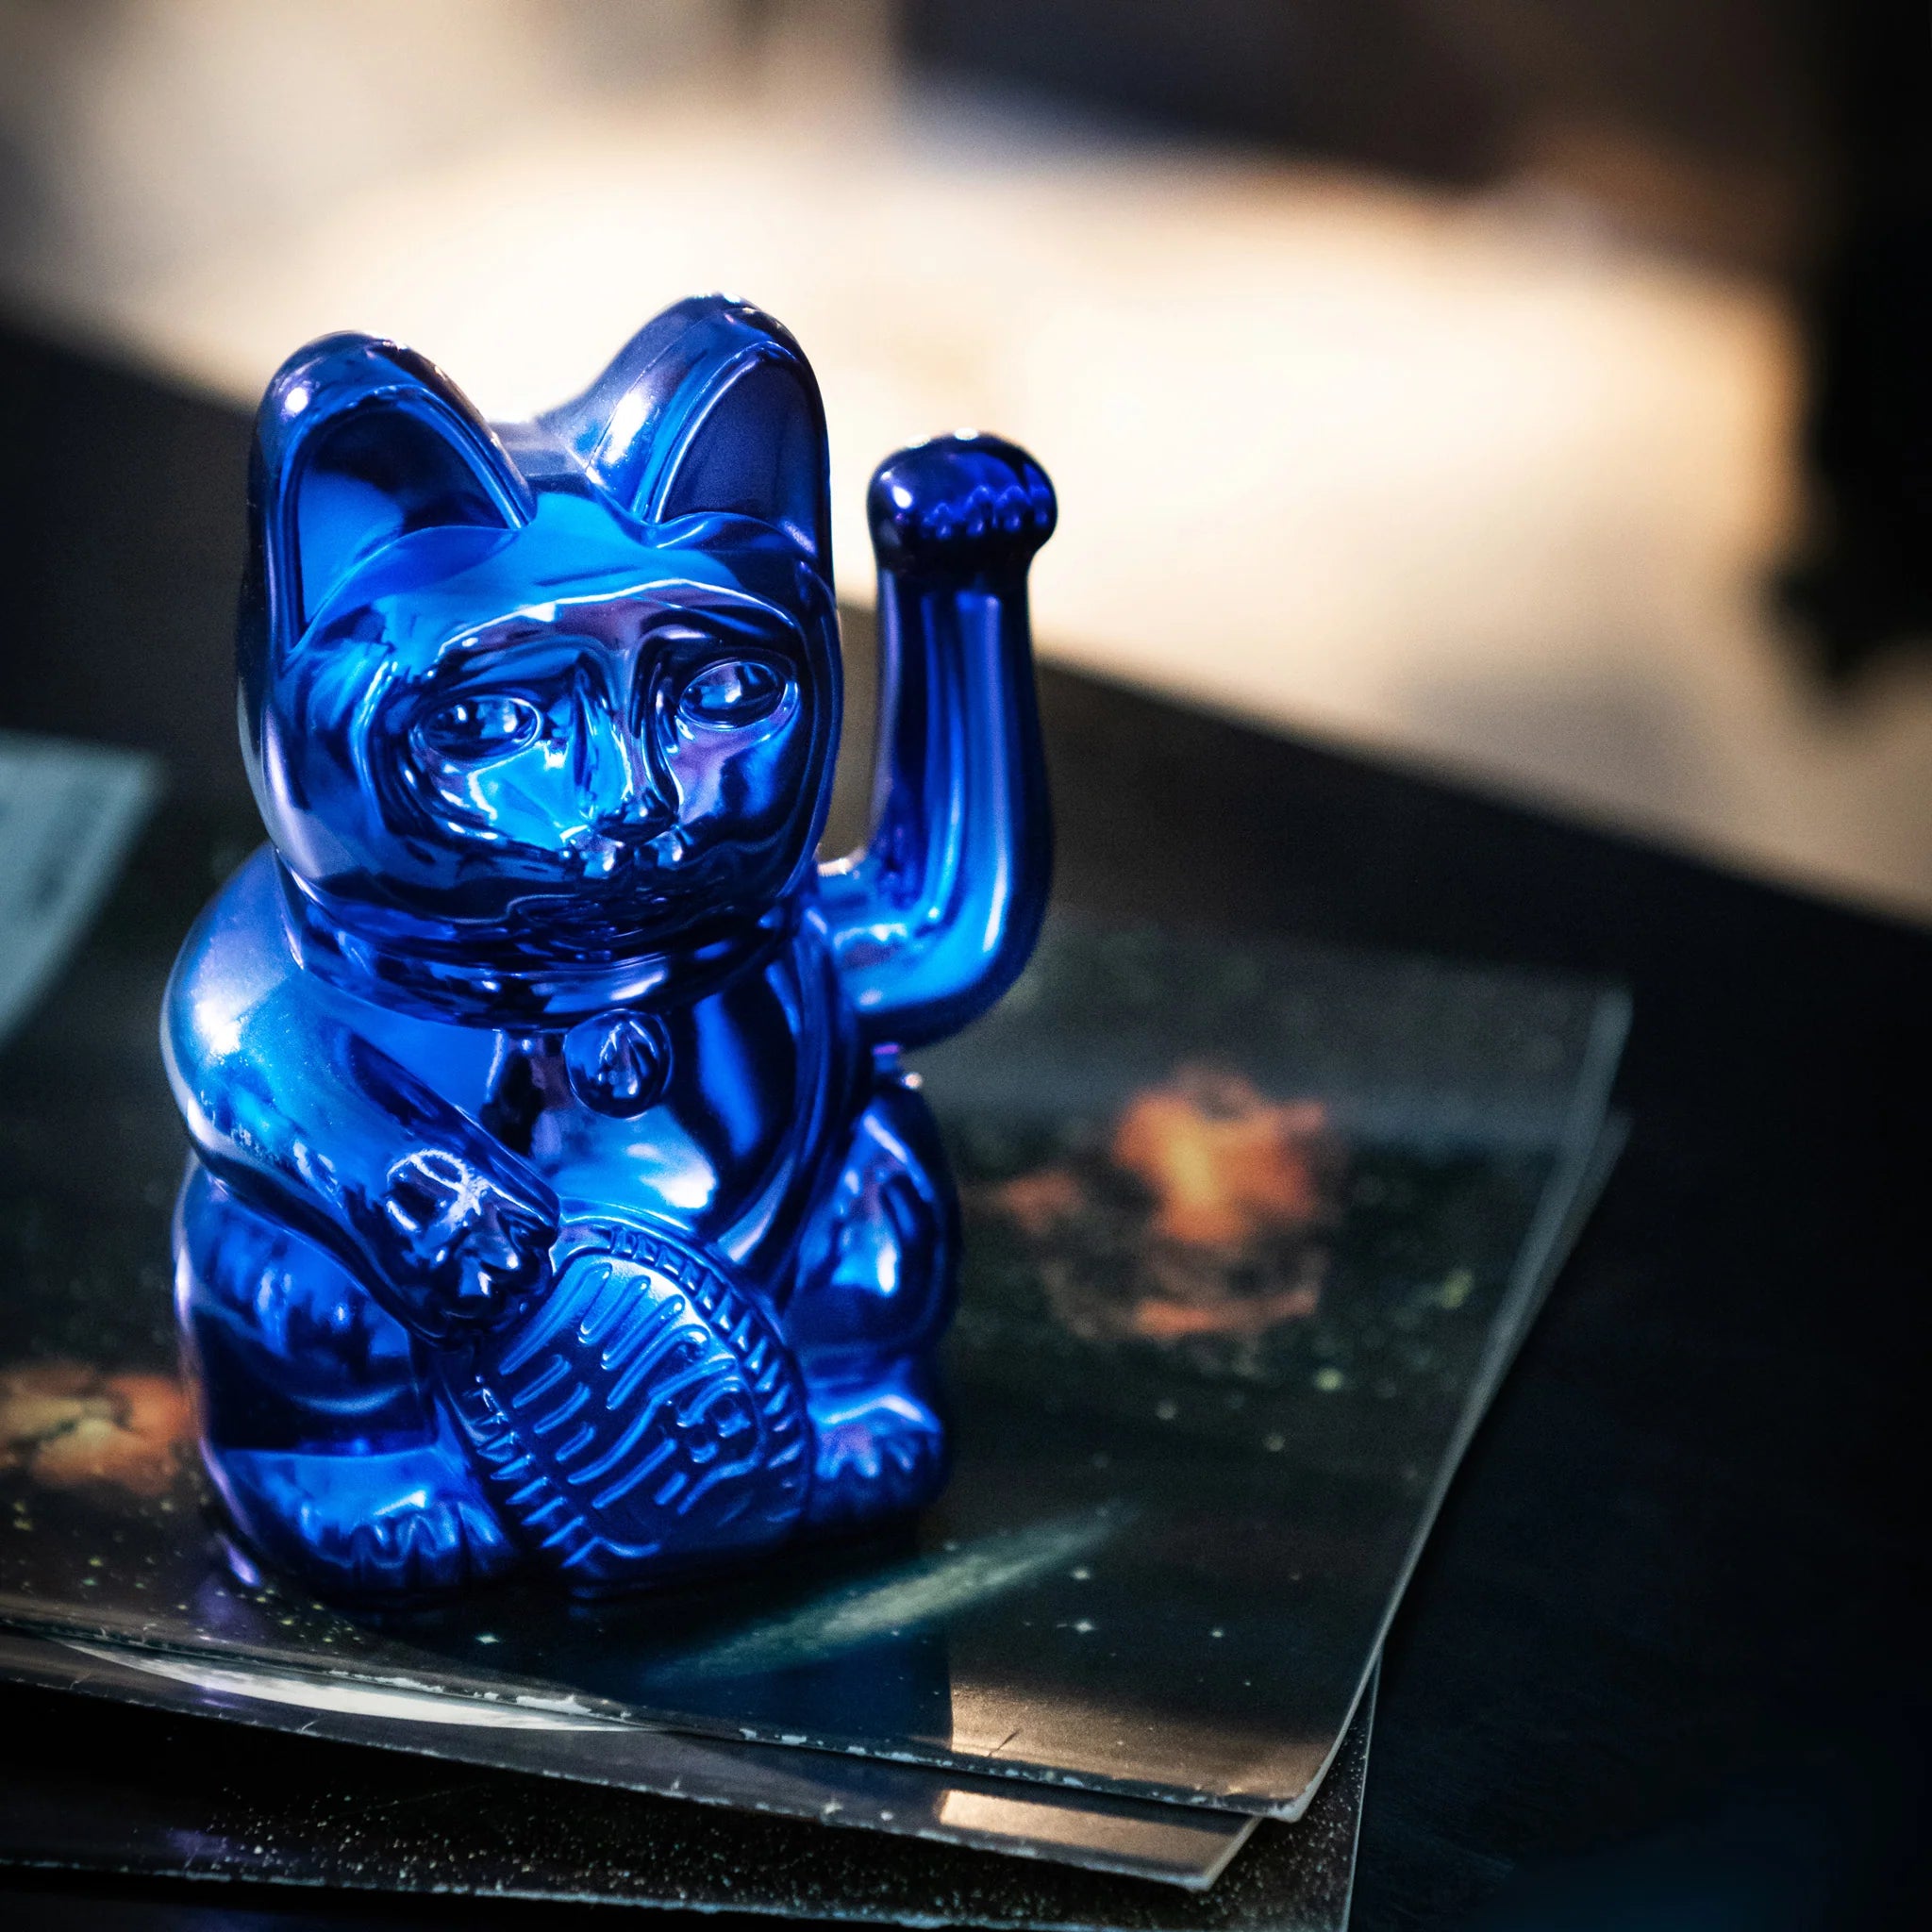 Lucky cat - waving cat - cosmic - earth - shiny blue